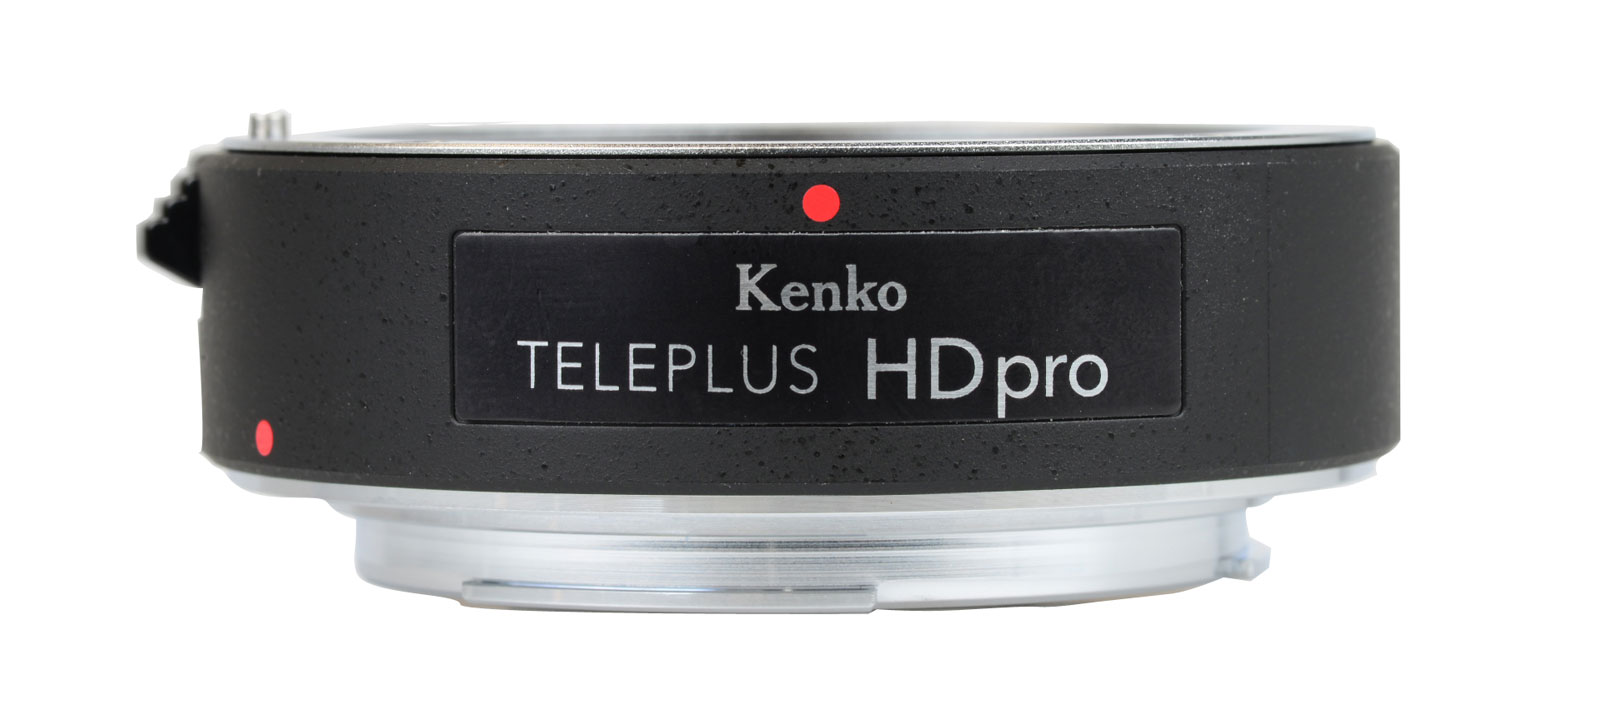 Kenko TELEPLUS HD pro 1.4x DGX (высота около 2 см).